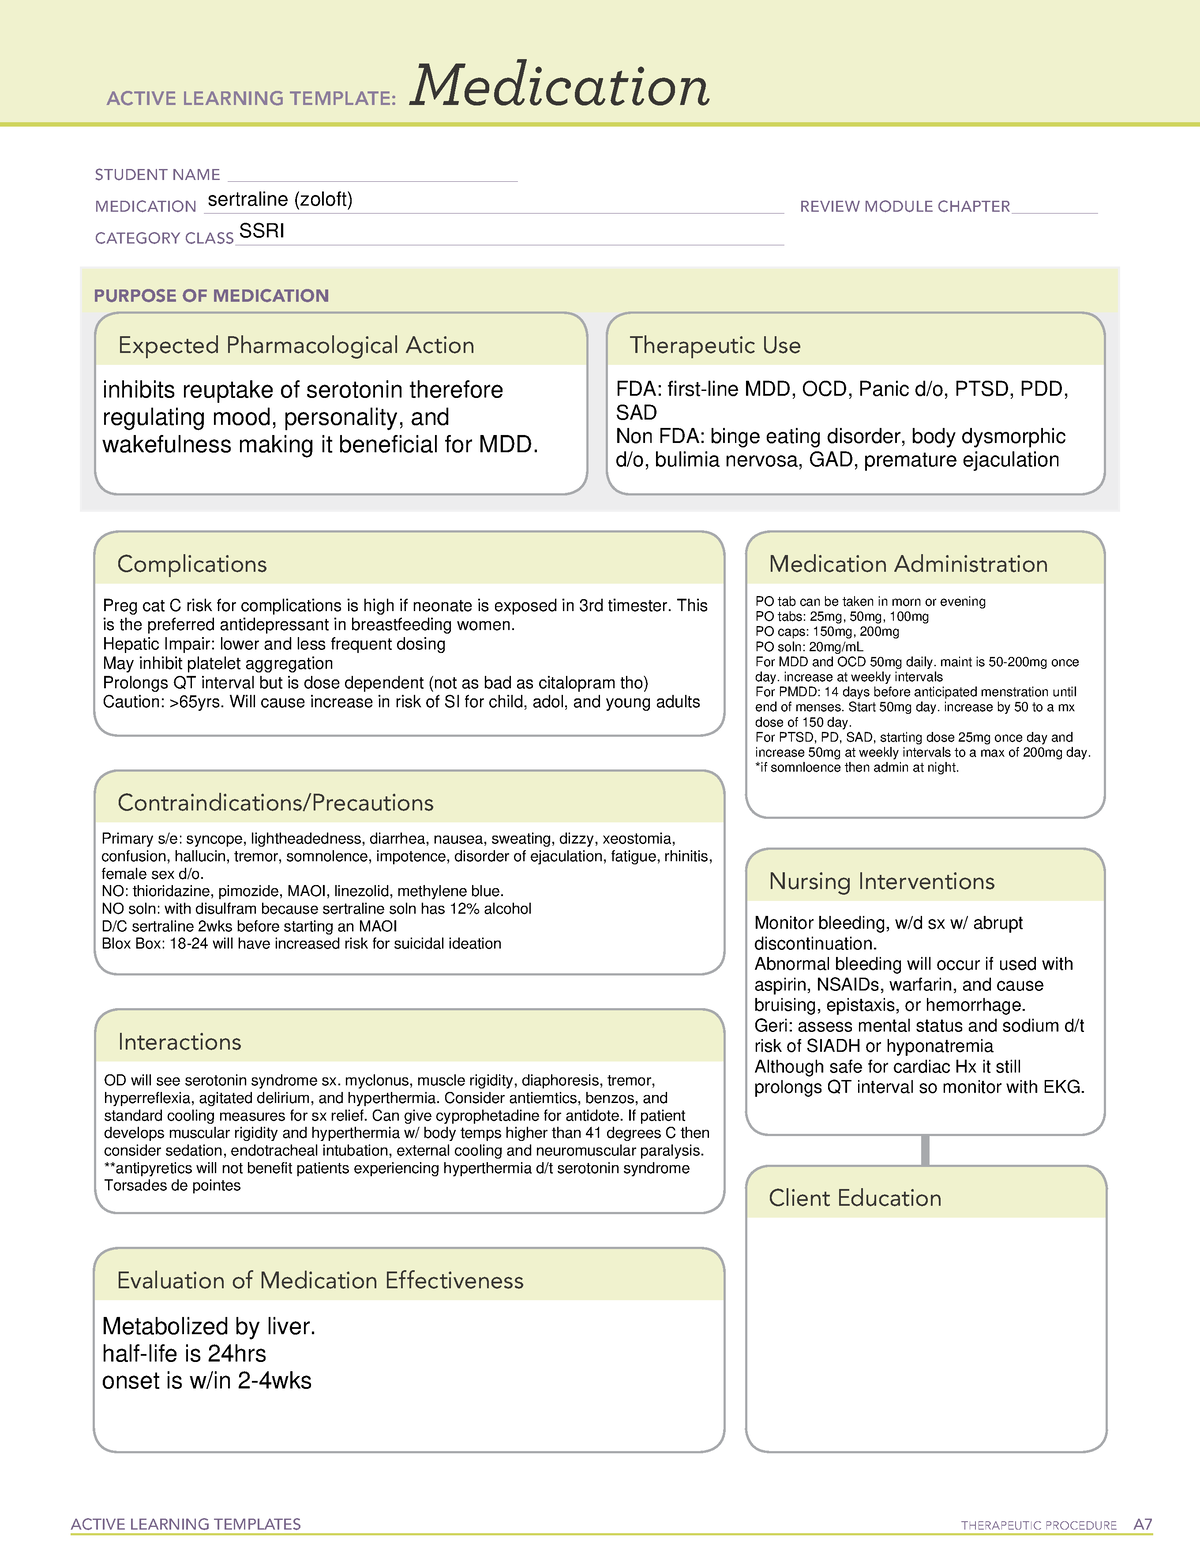 sertraline-drug-card-information-active-learning-templates